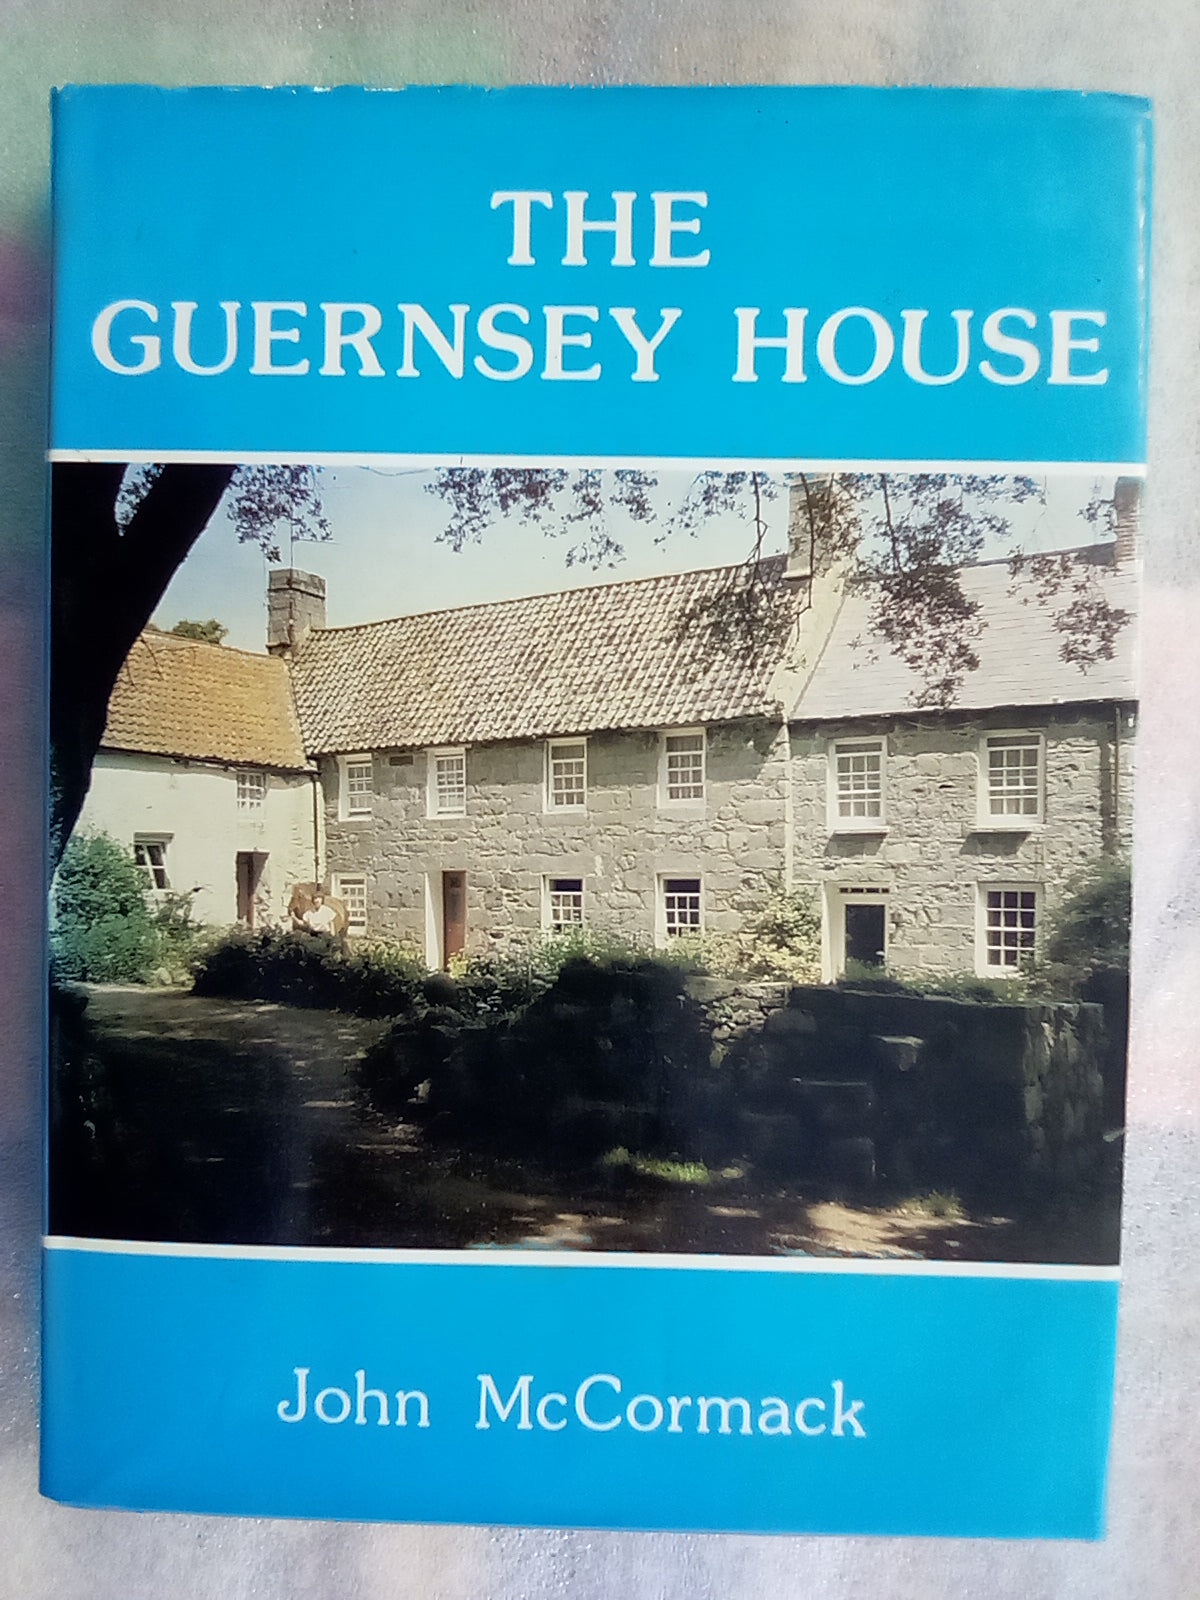 The Guernsey House by John McCormack